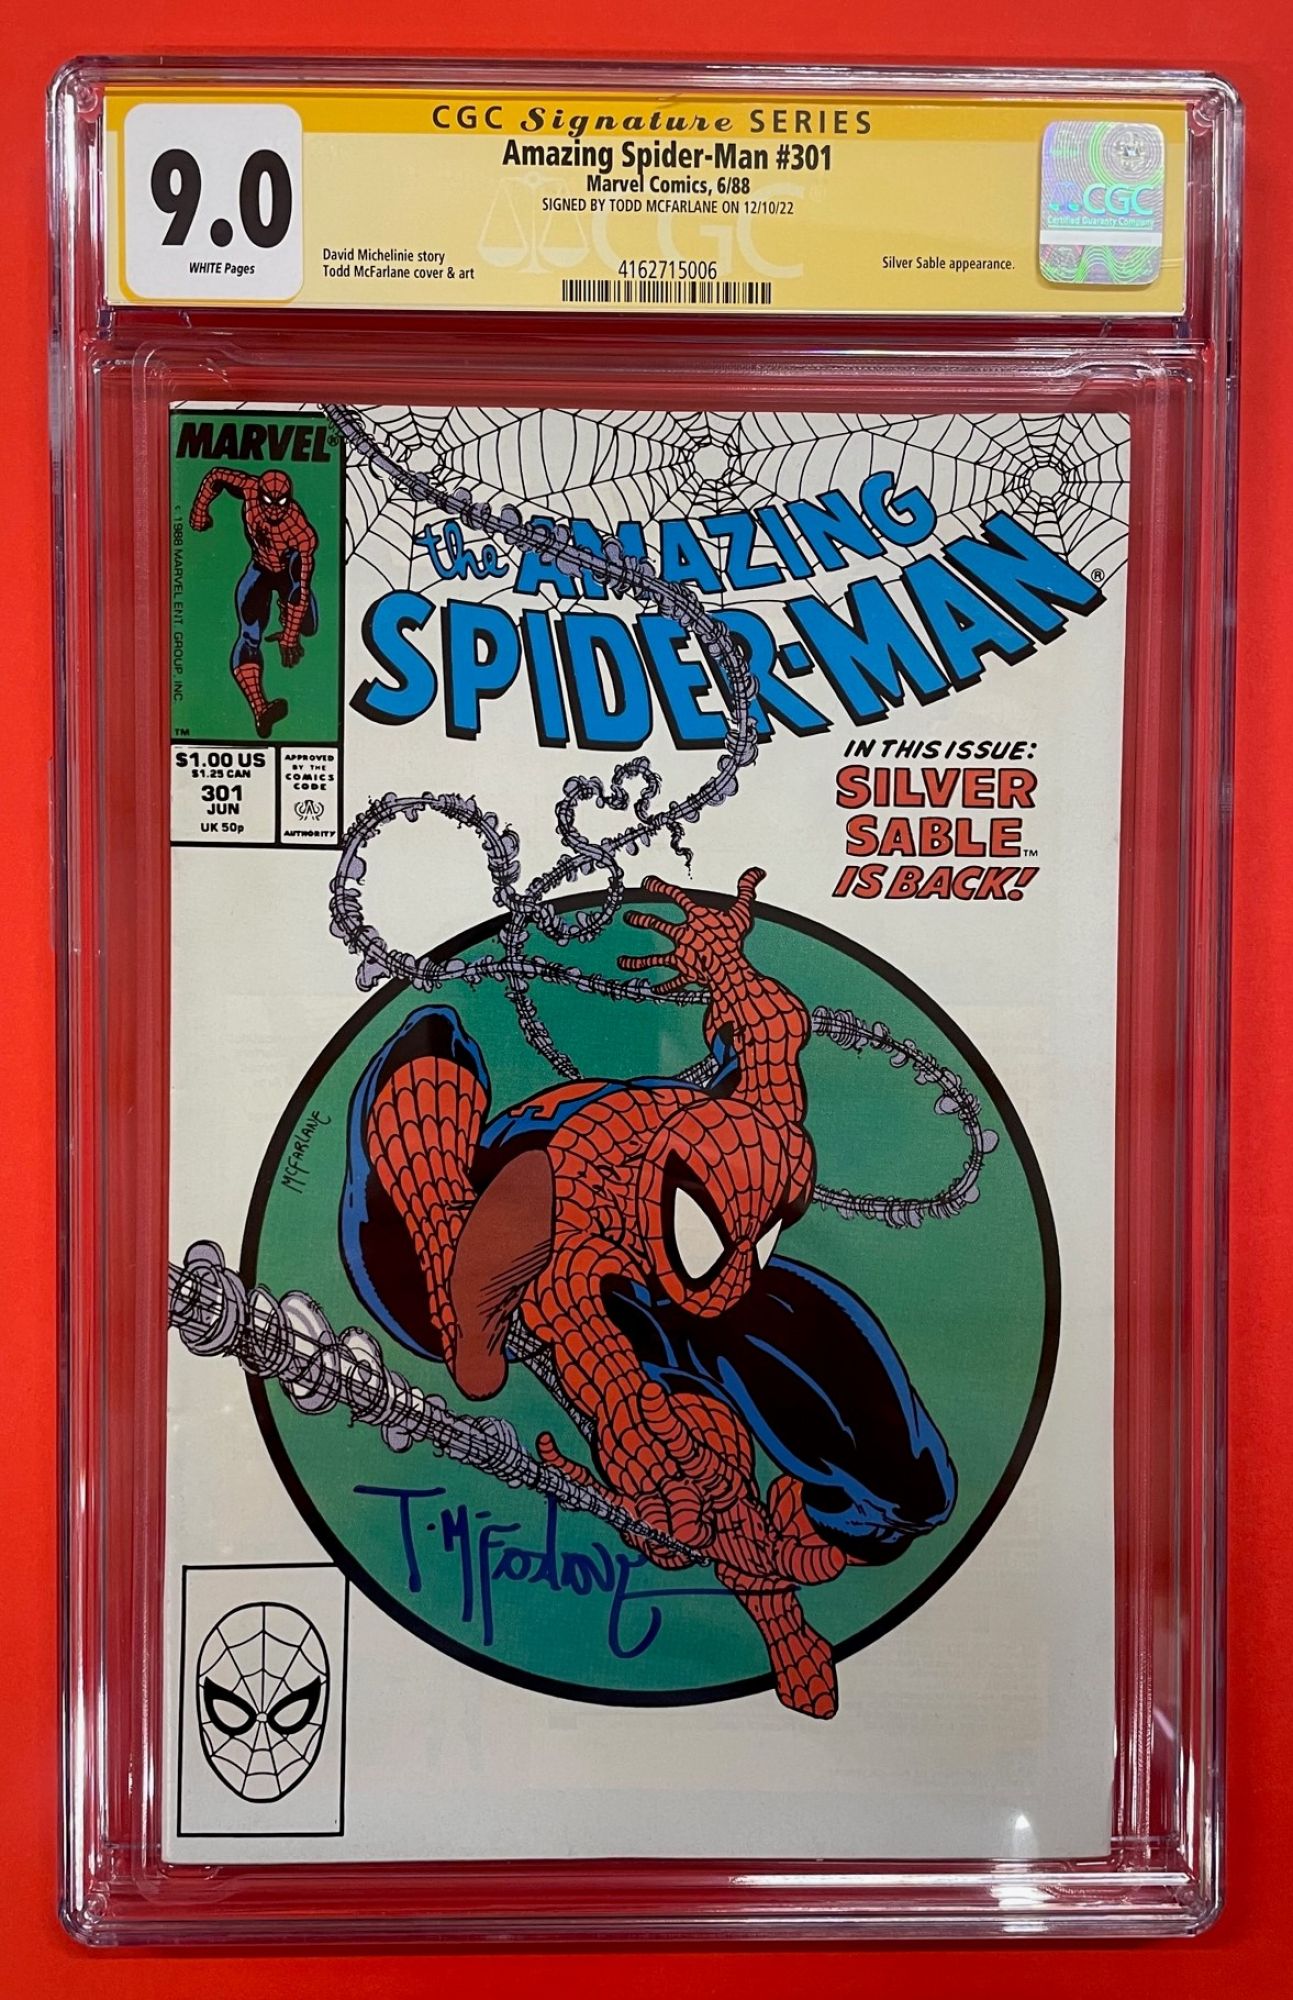 Amazing Spider-Man #301, Jun 1988, 9.0 VF/NM, CGC Signed by Todd McFarlane